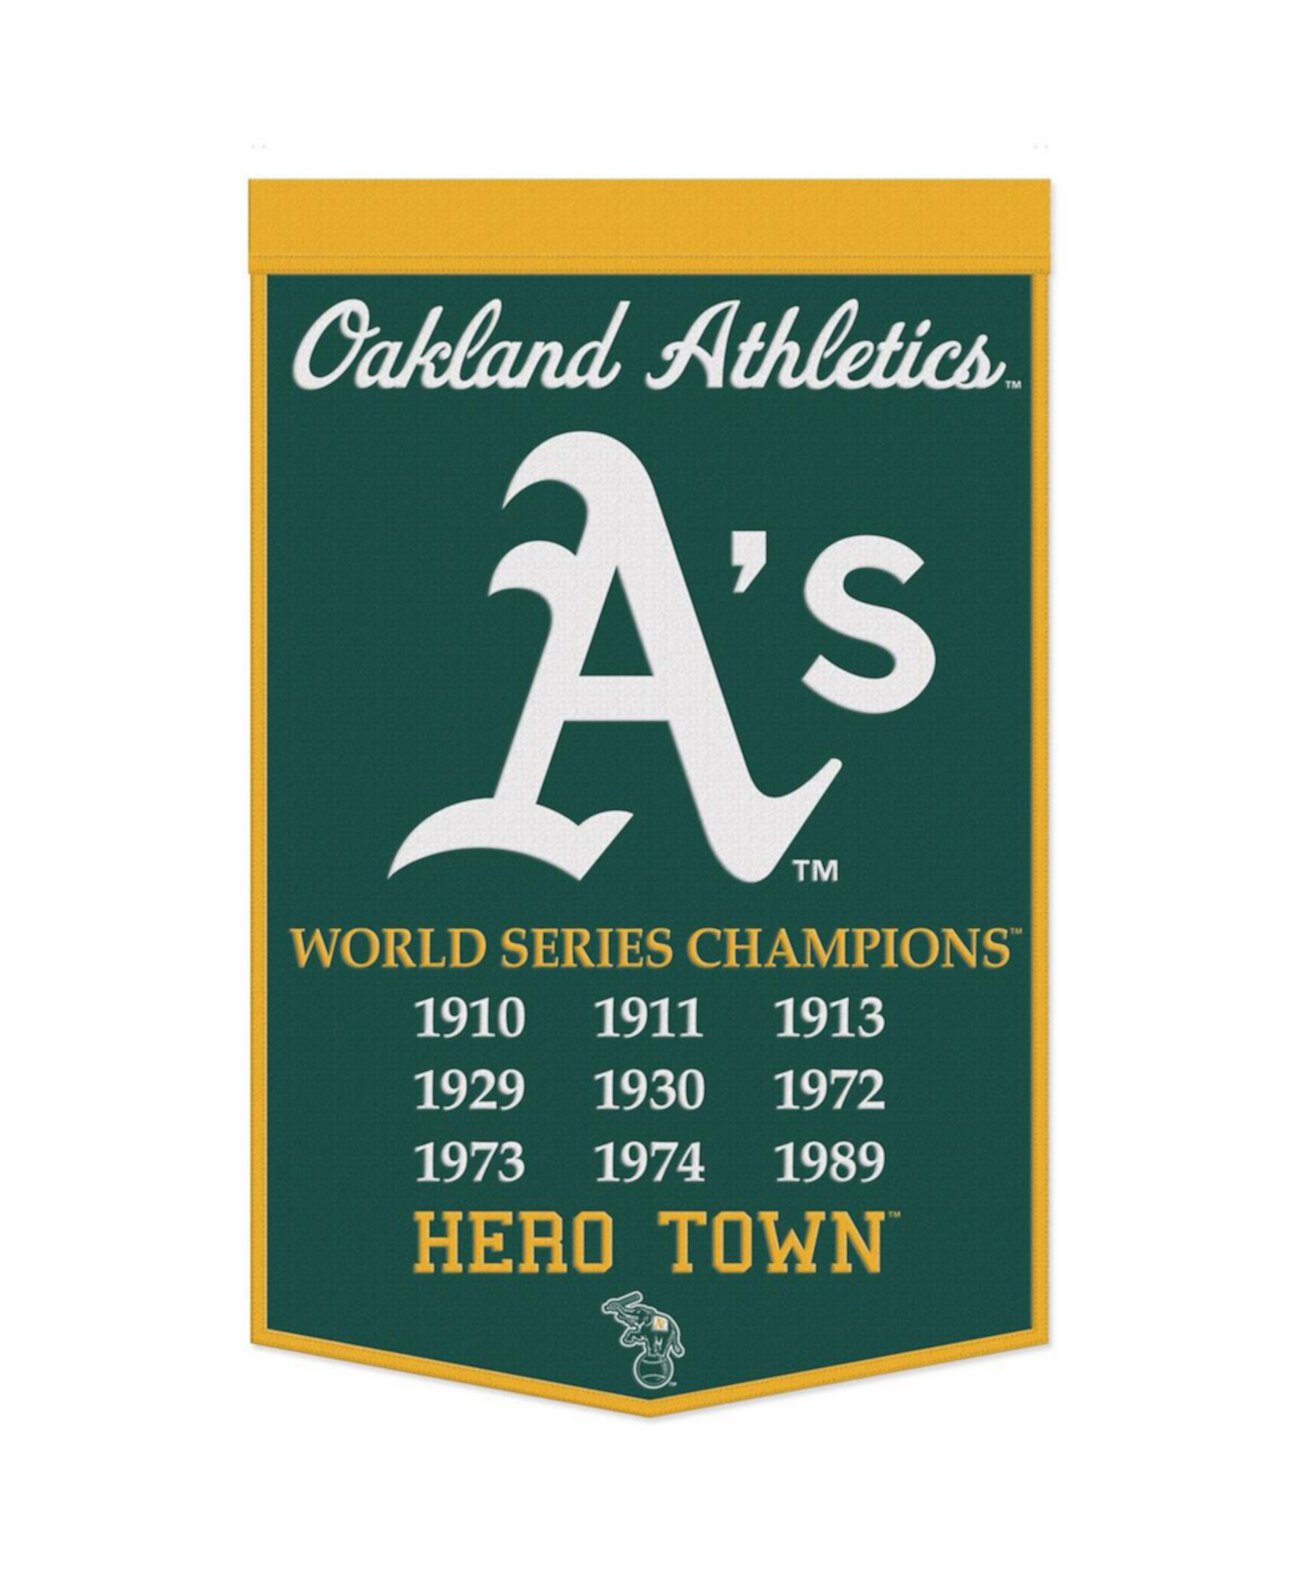 Oakland Athletics 24" x 38" Championship Banner Wincraft